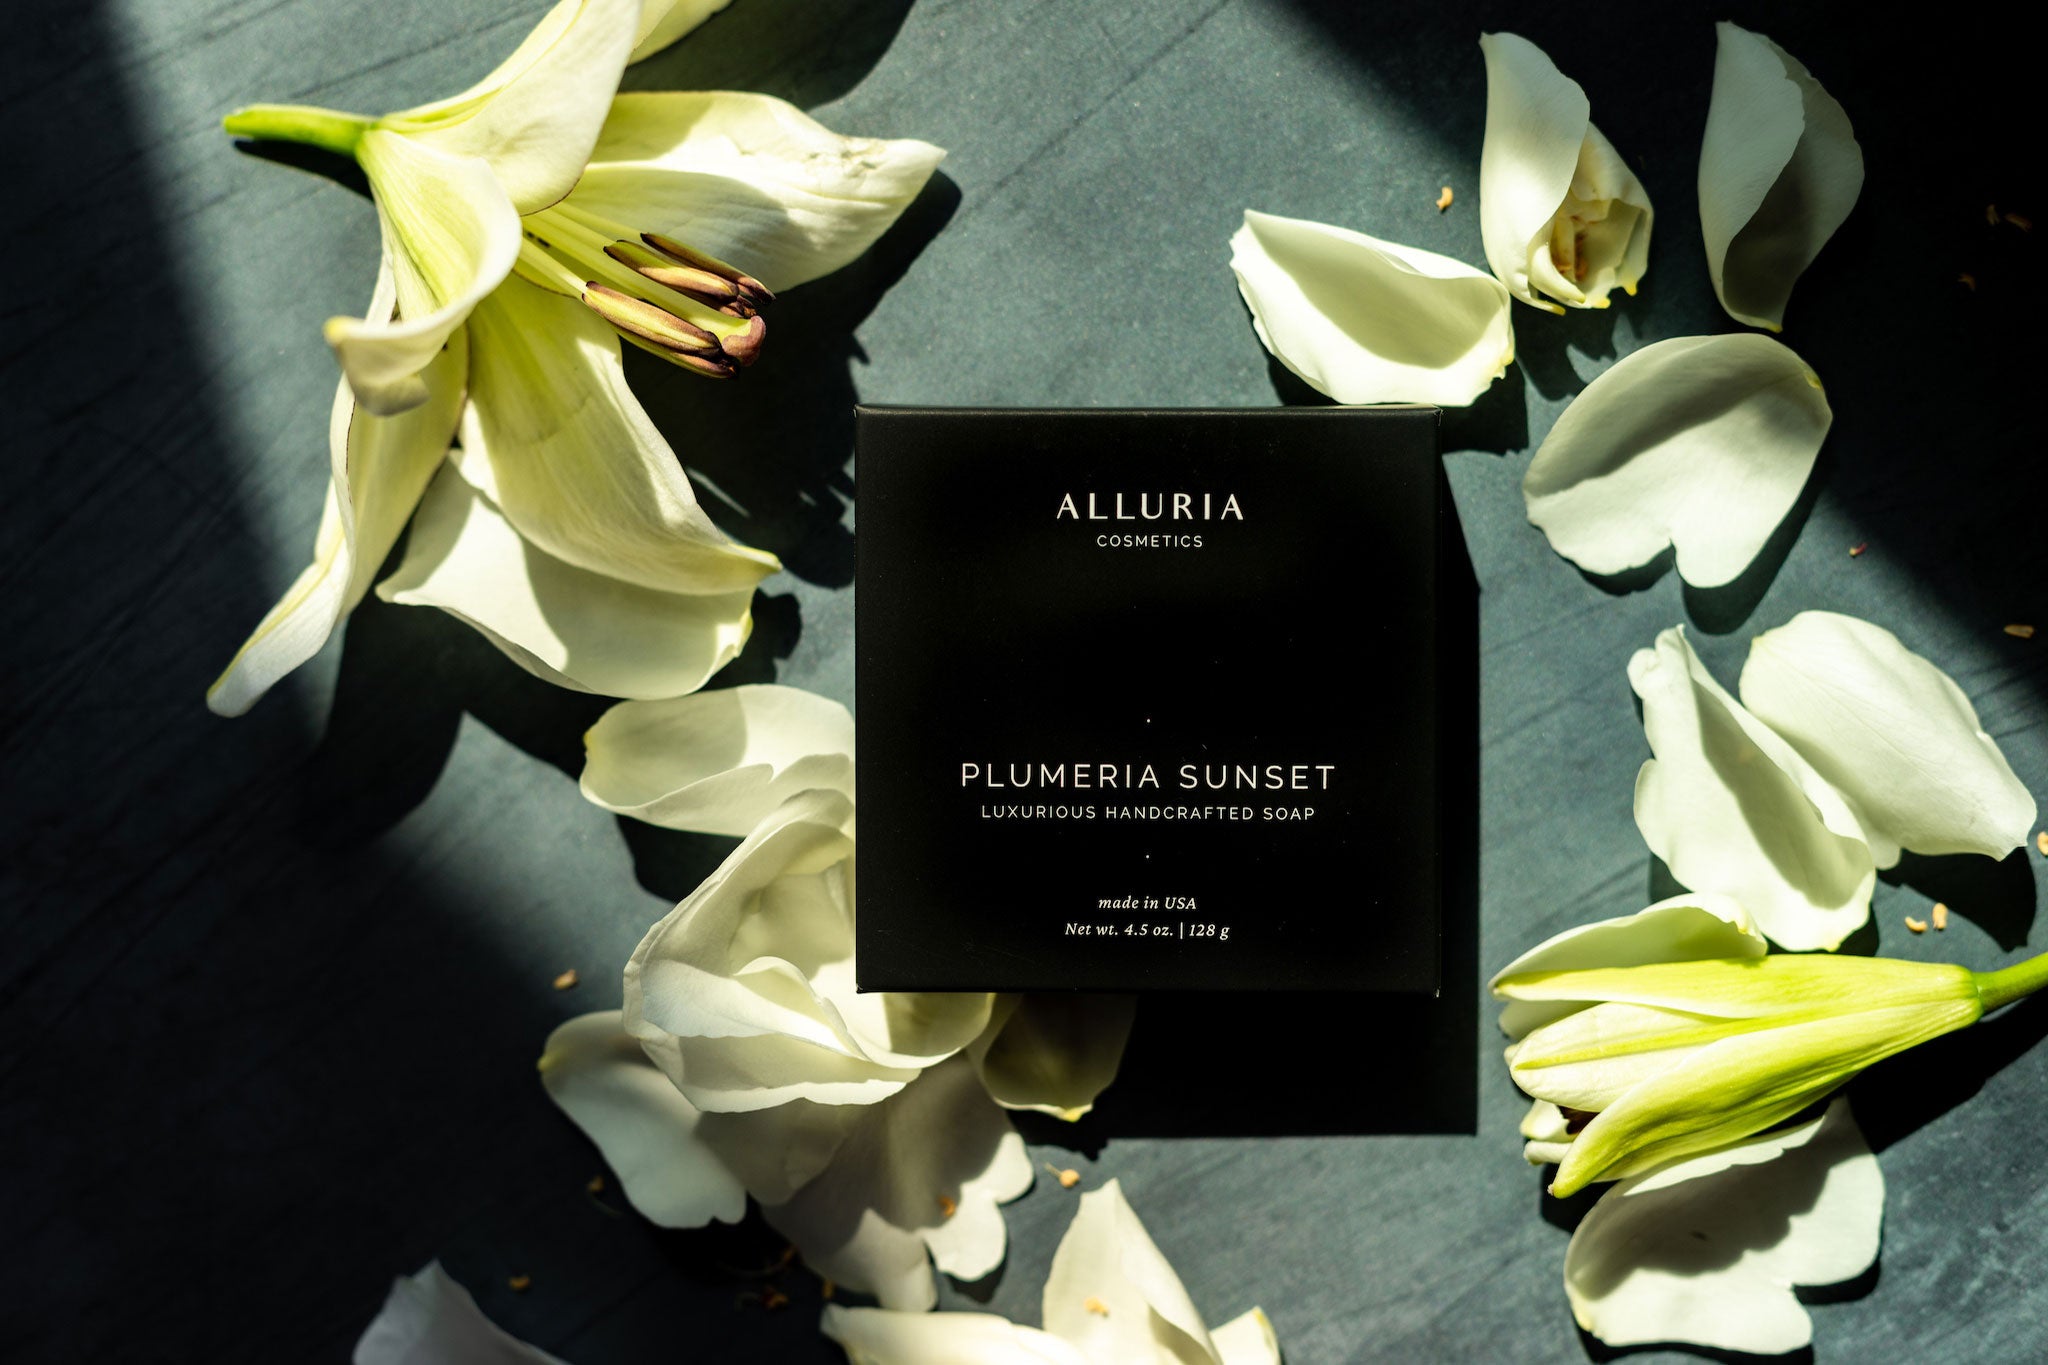 Karolina Król Studio minimalist brand identity design and packaging design for Alluria Cosmetics